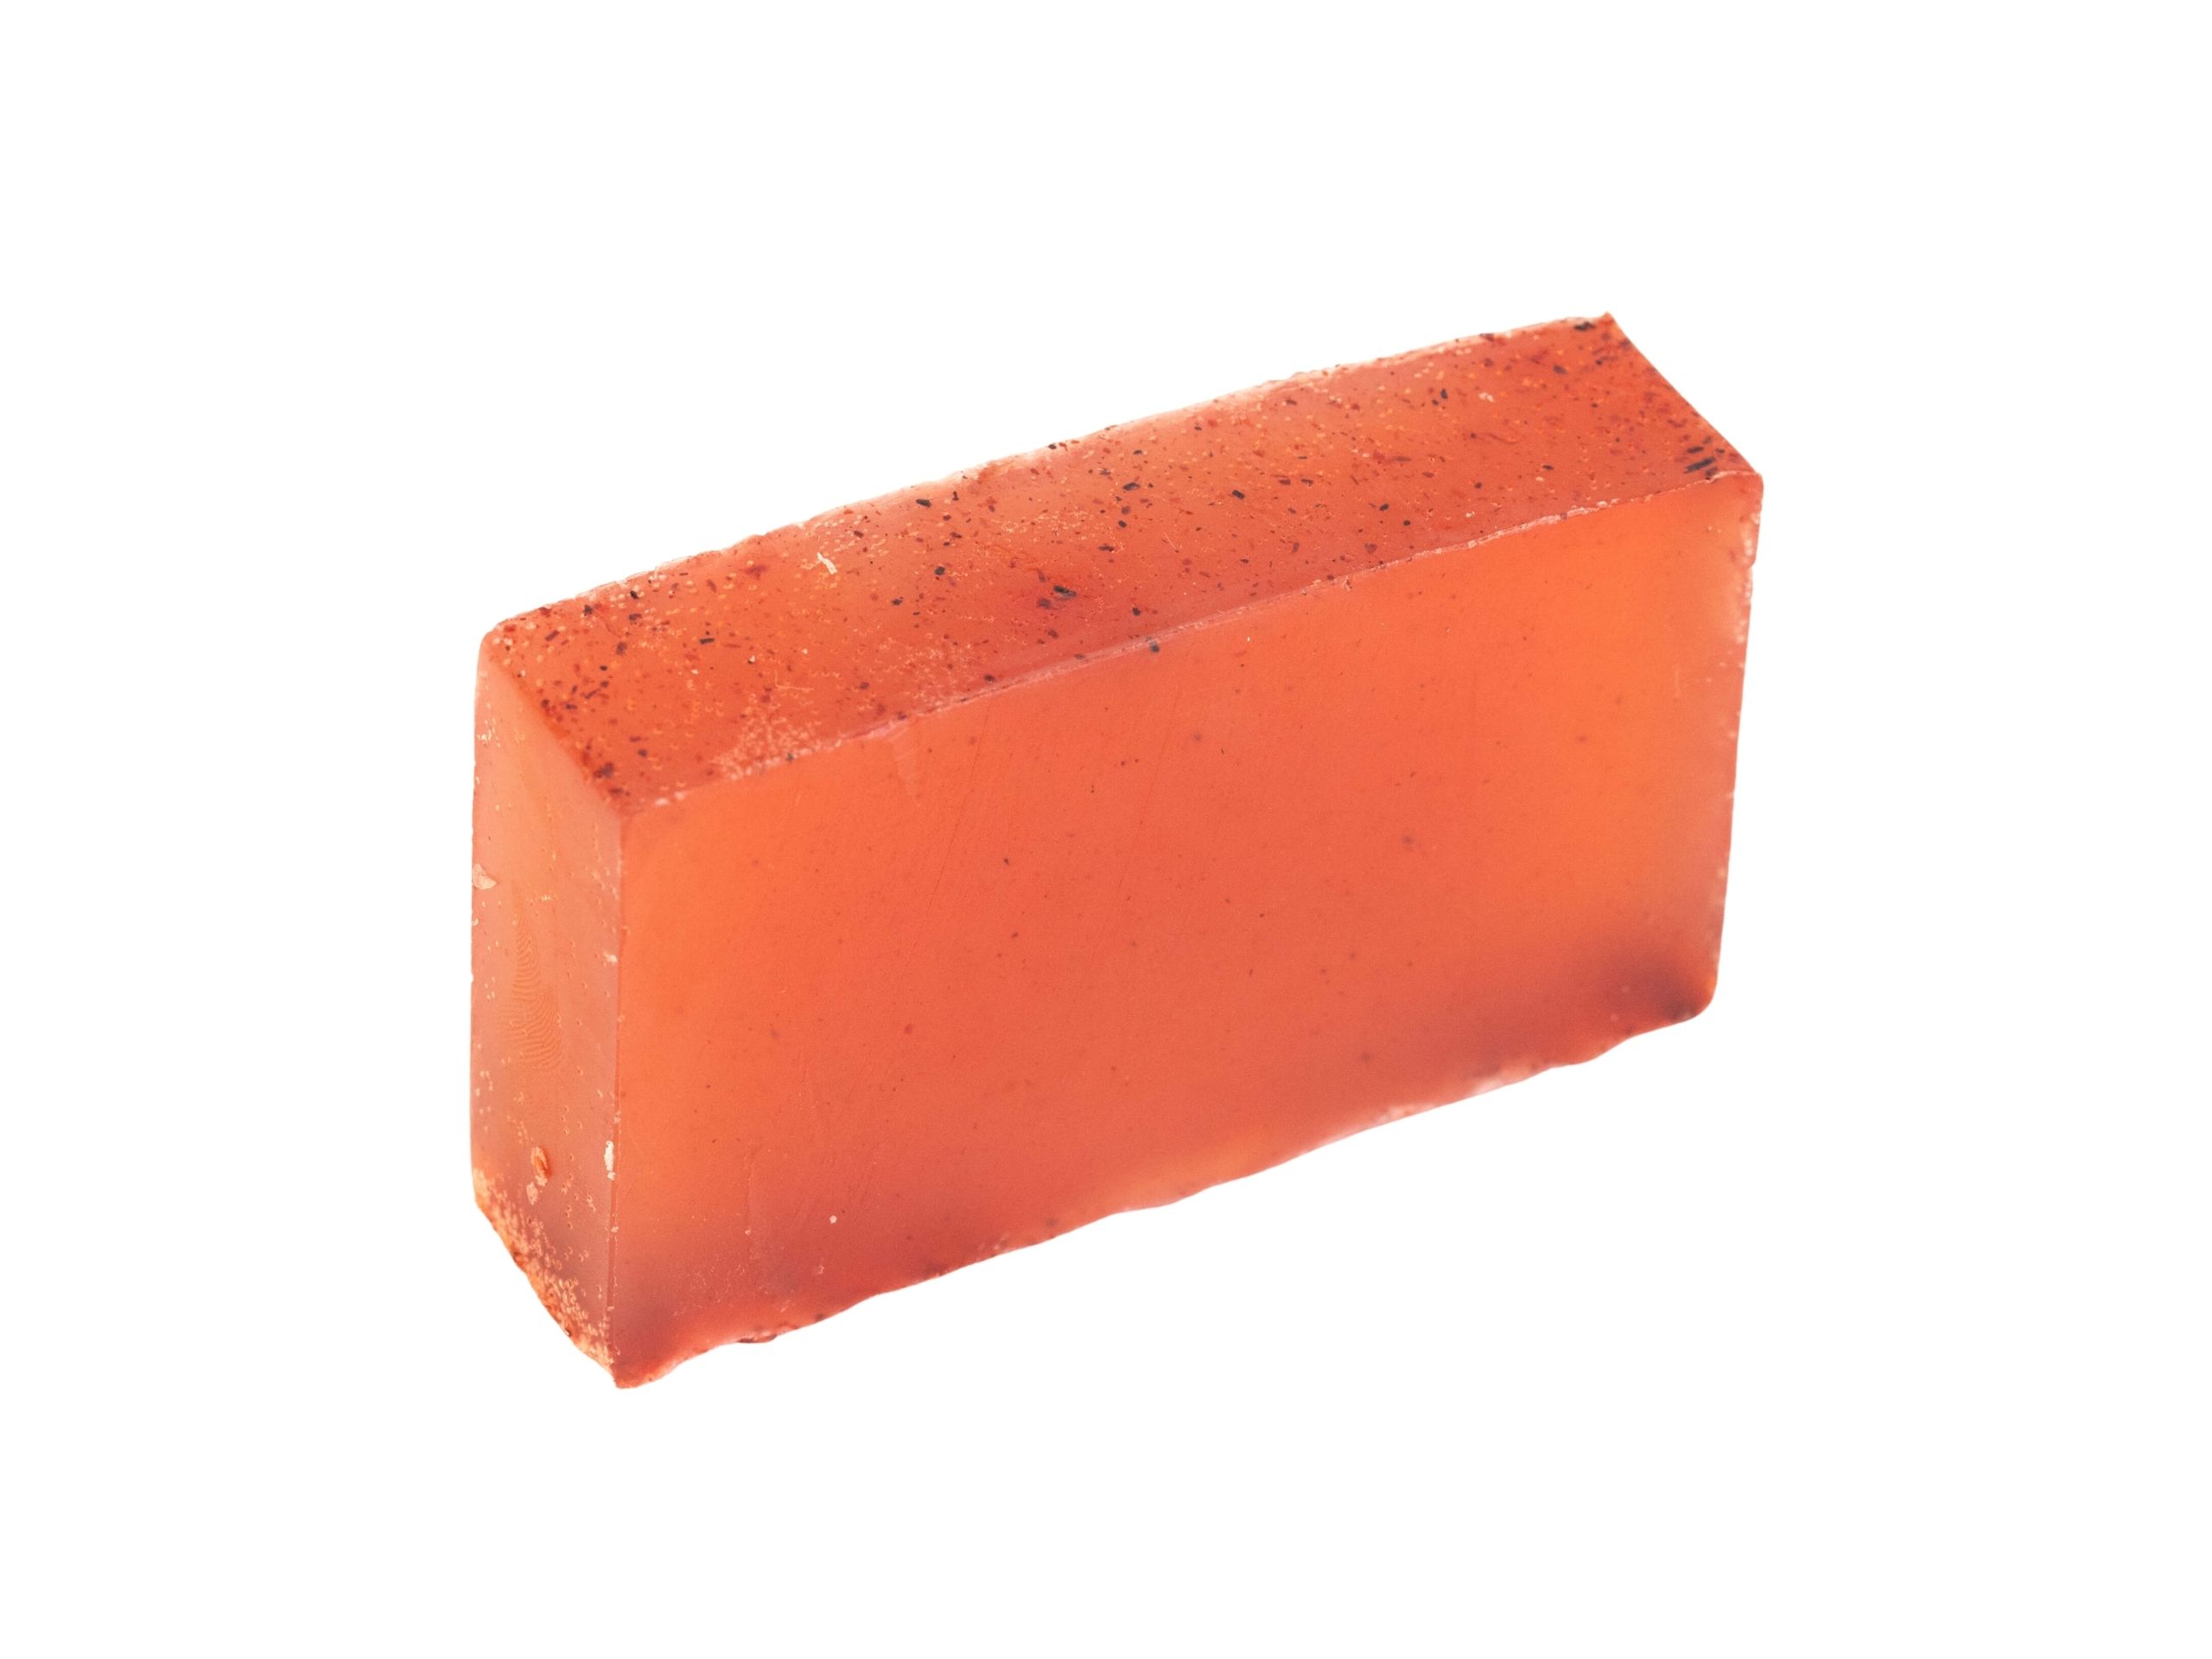 Watermelon Organic Soap ( Fresh cut slice)